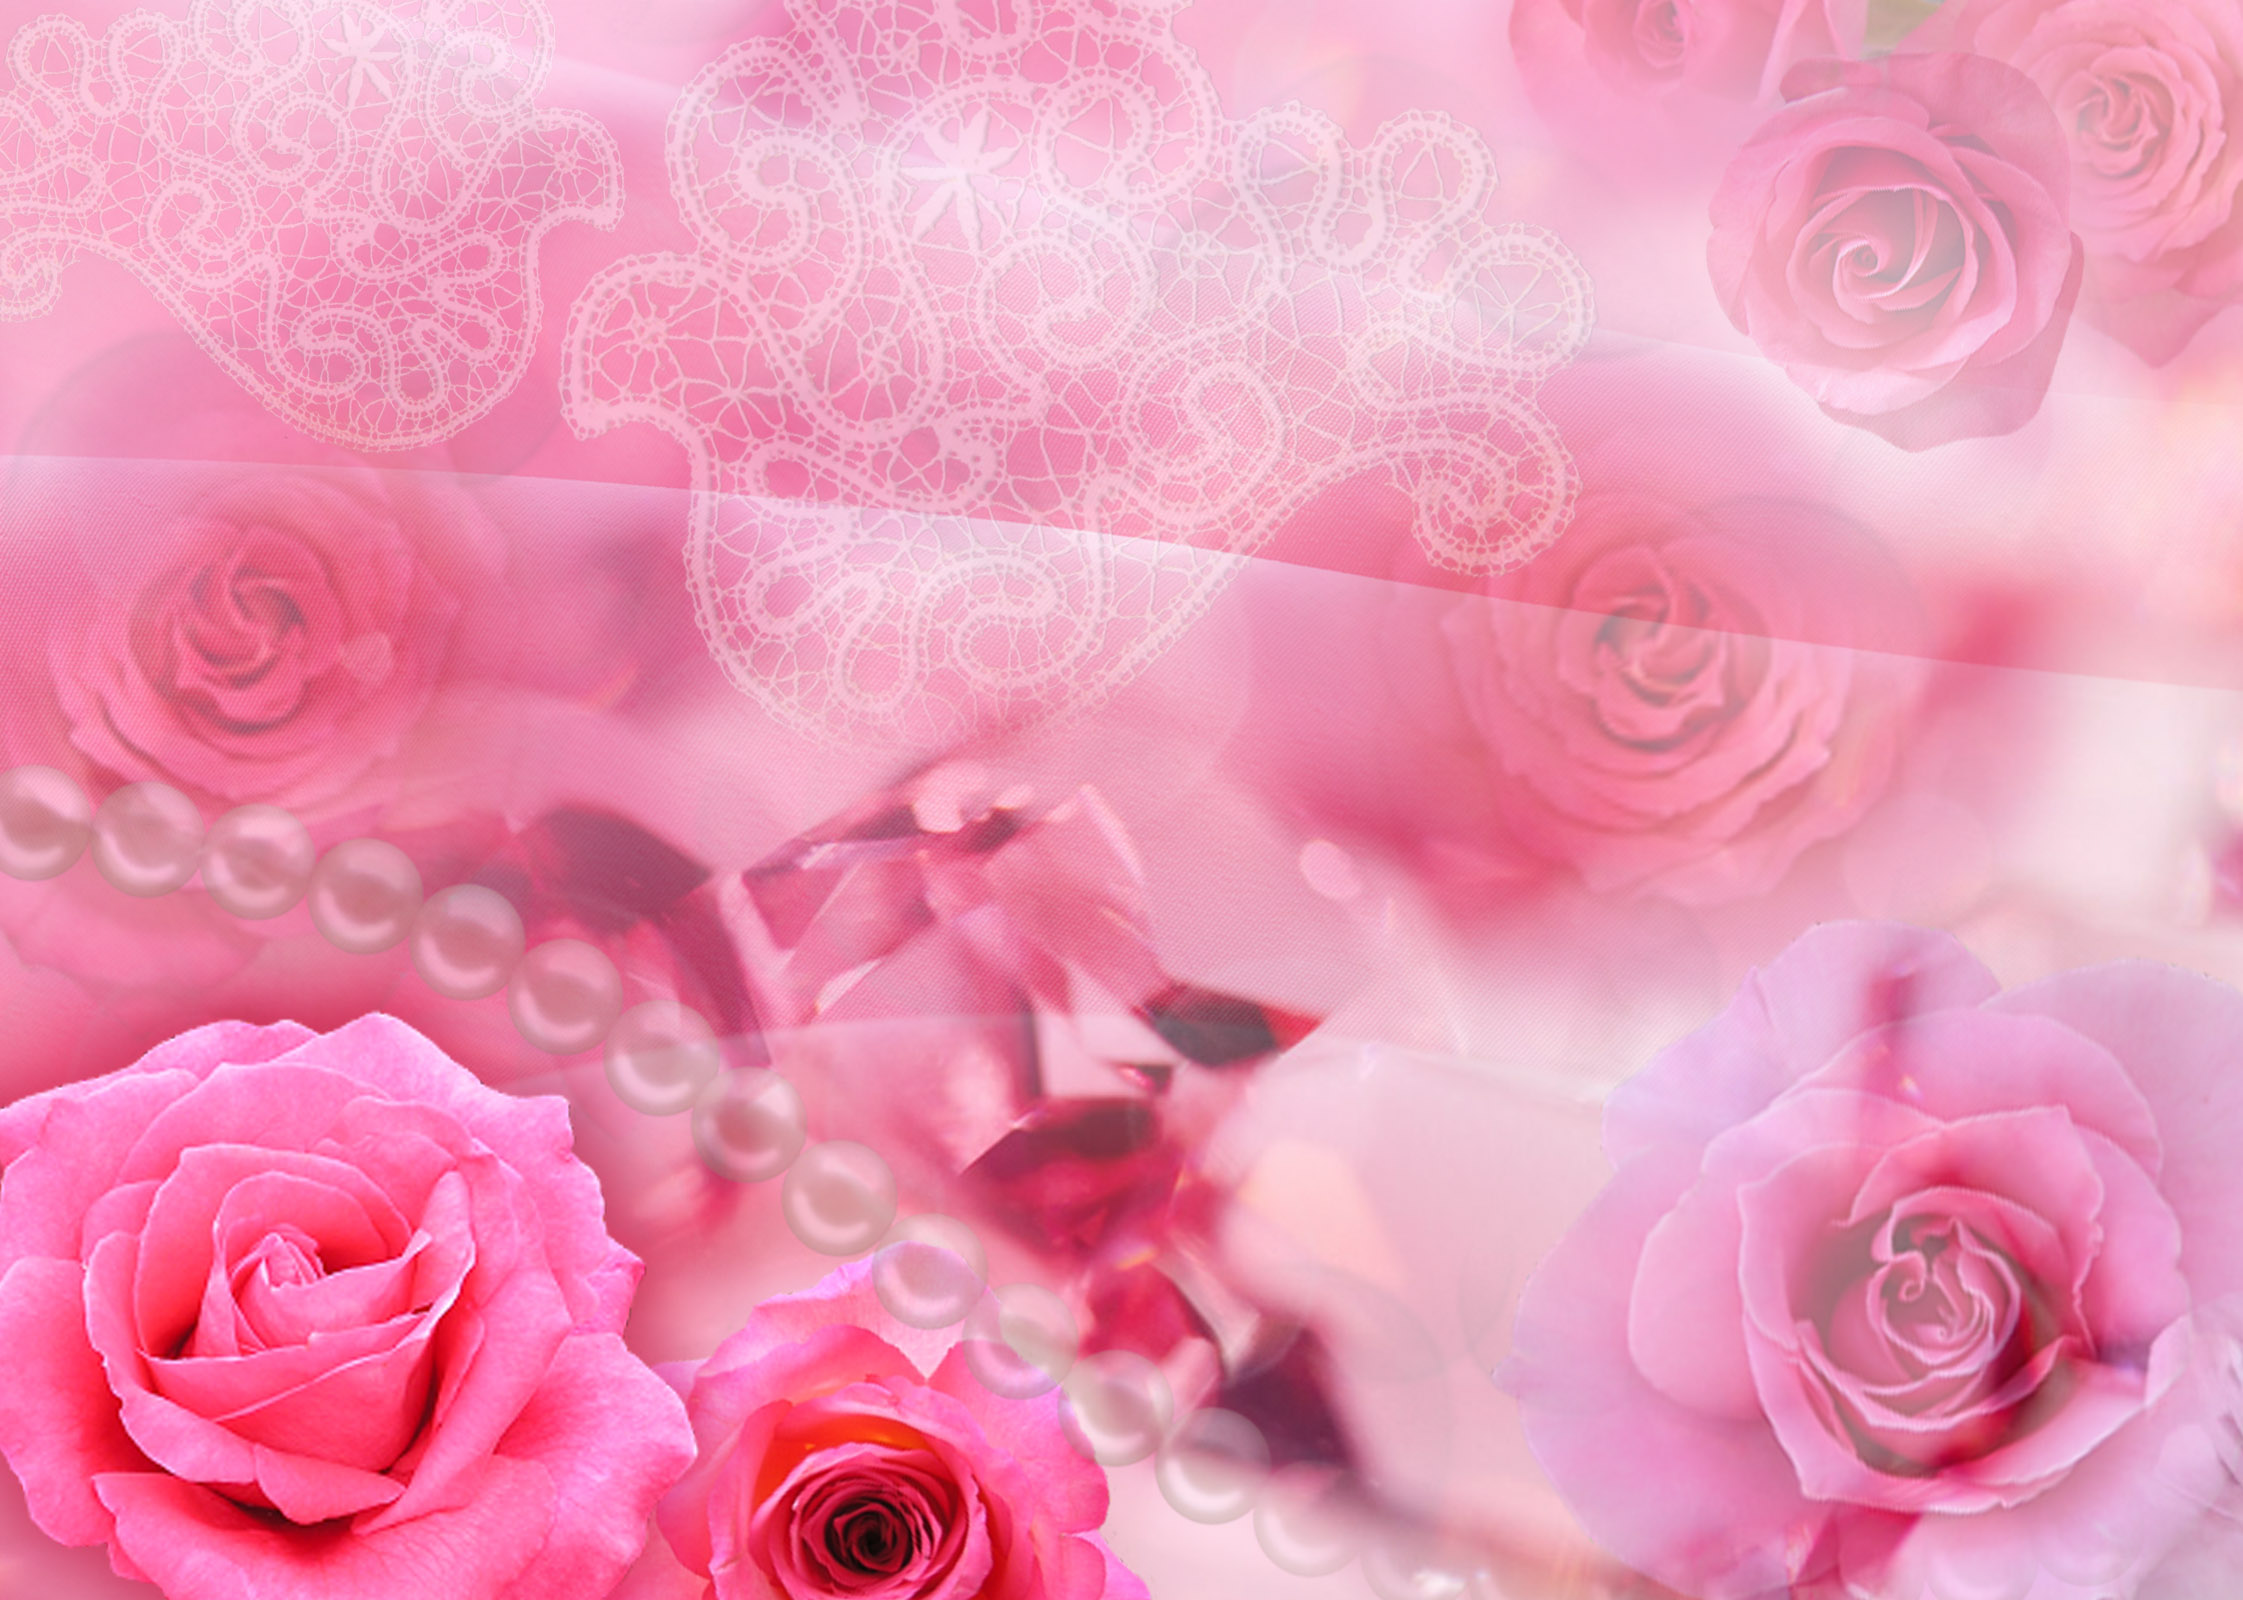  Roses, download photo, wallpapers for desktop